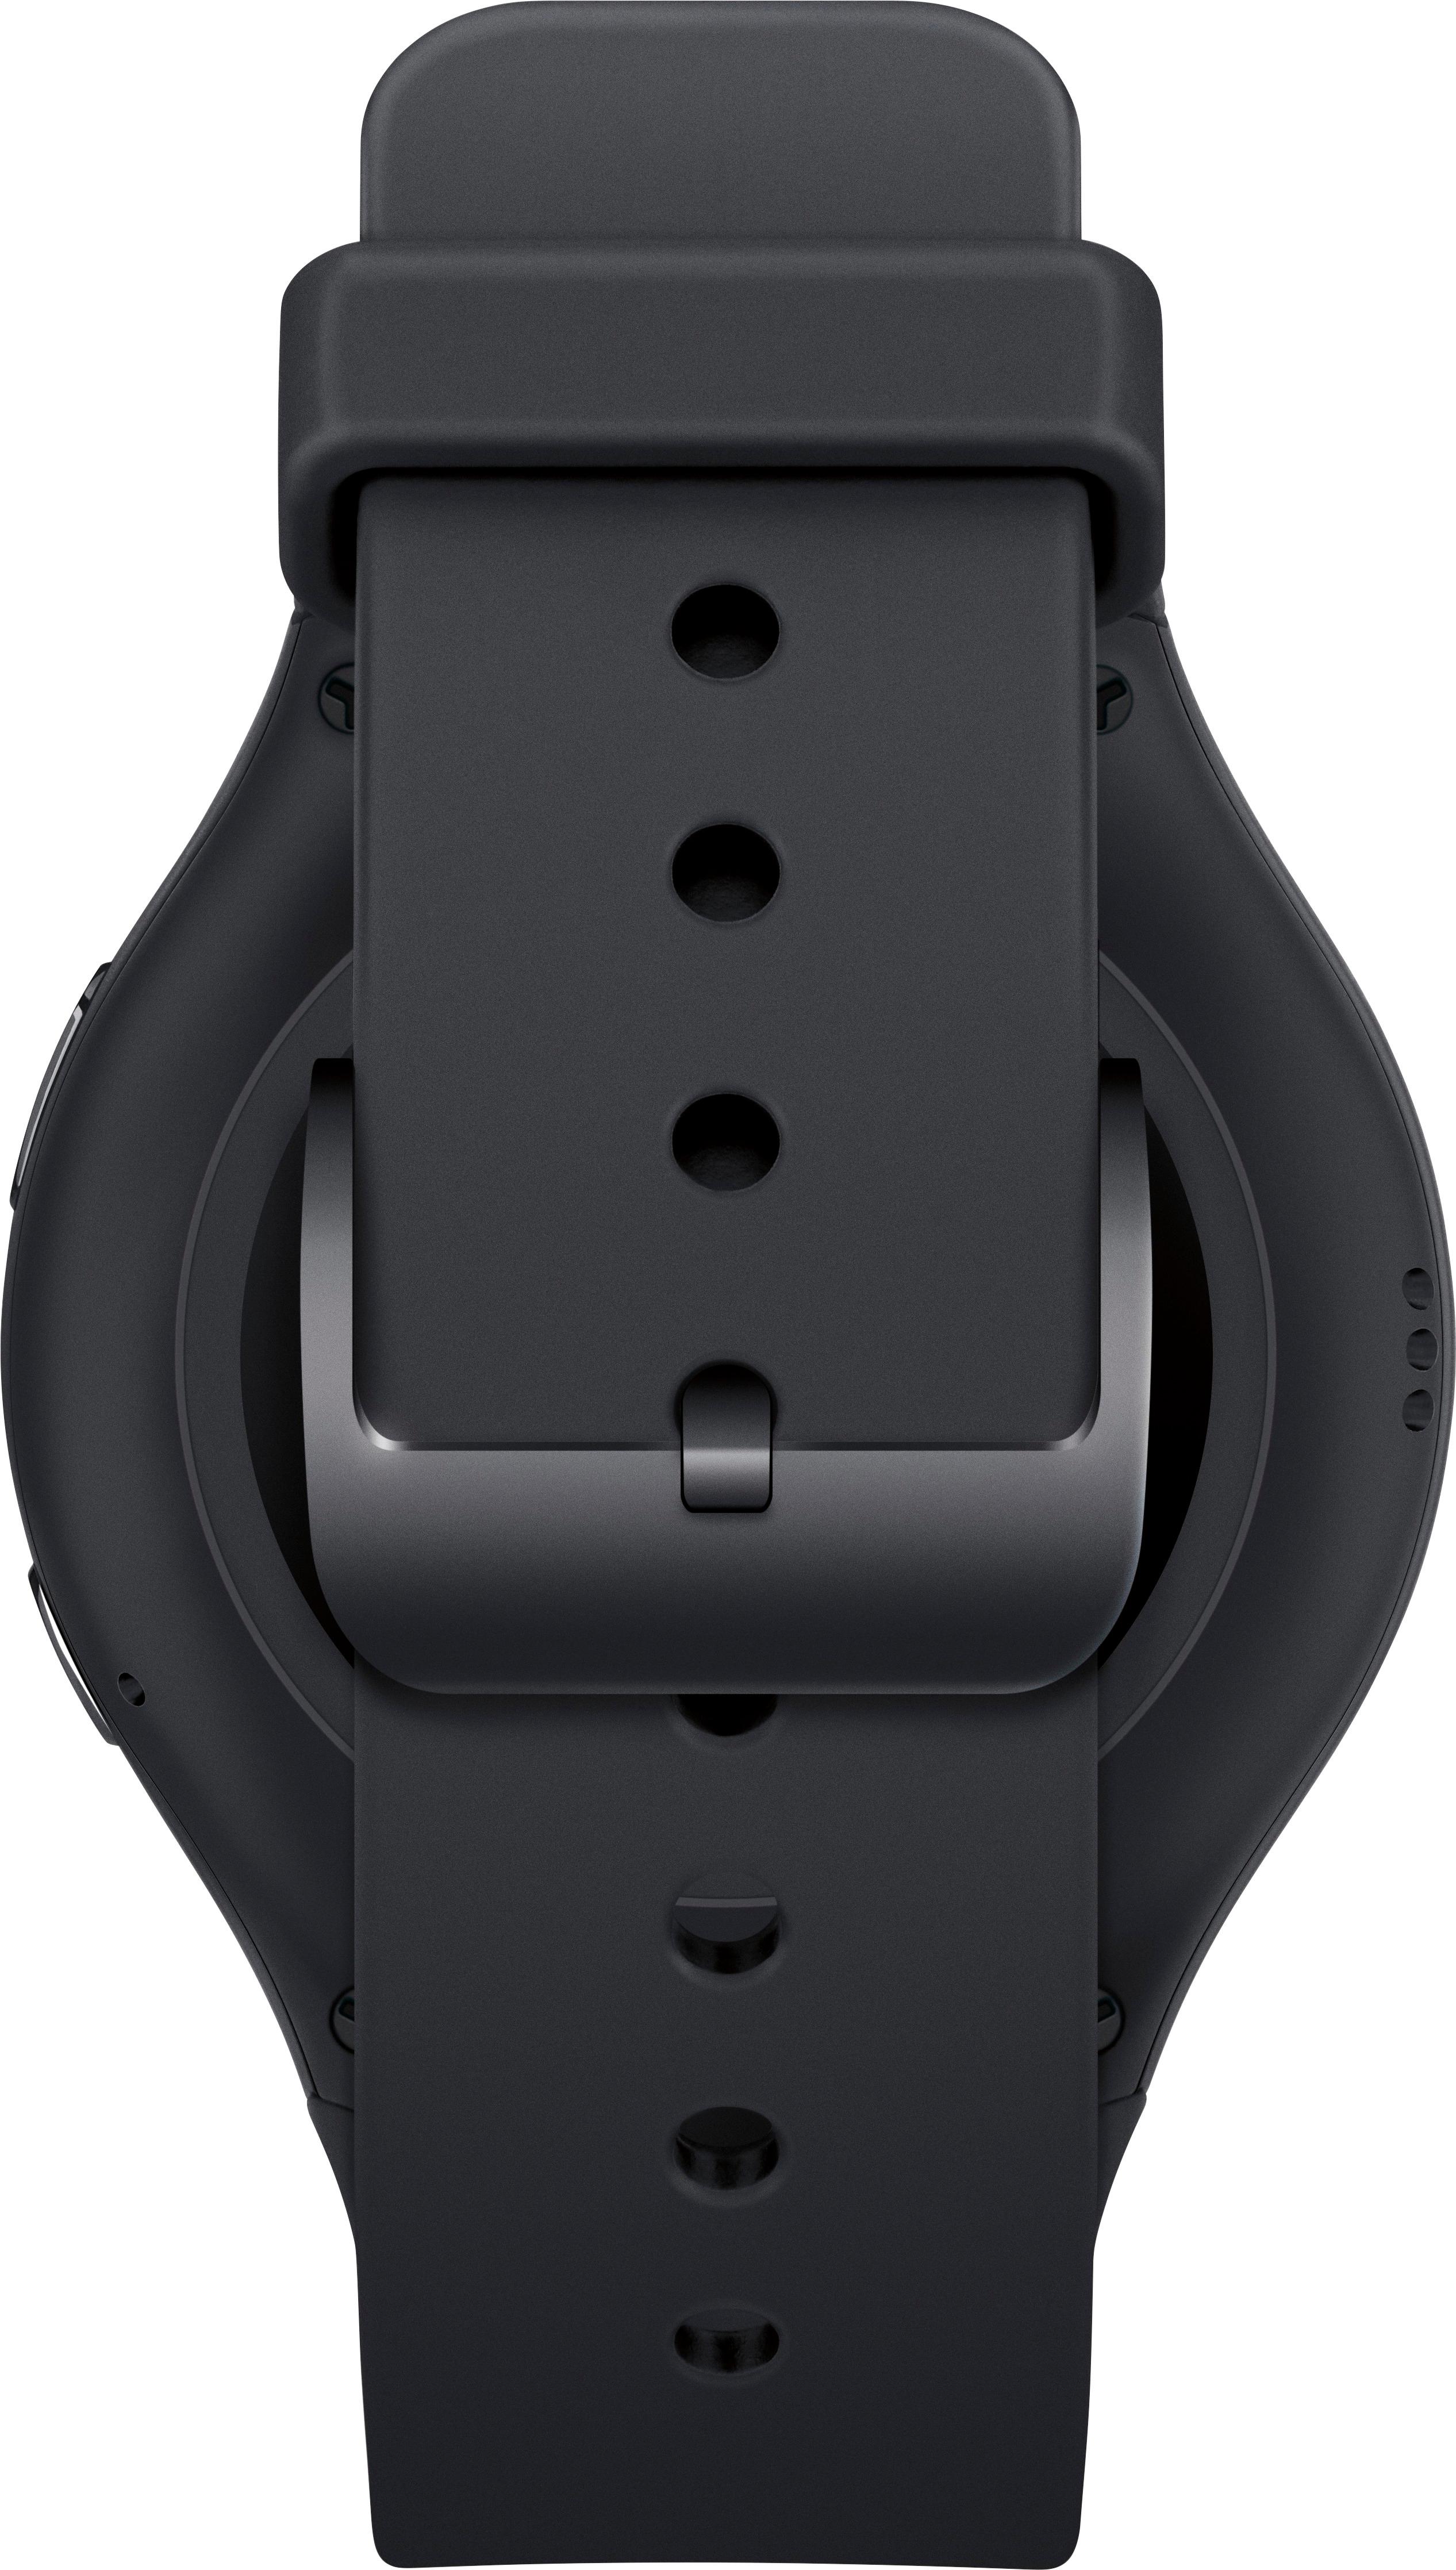 Back View: Samsung - Geek Squad Certified Refurbished Gear S2 Smartwatch 44mm Stainless Steel Verizon - Dark Gray